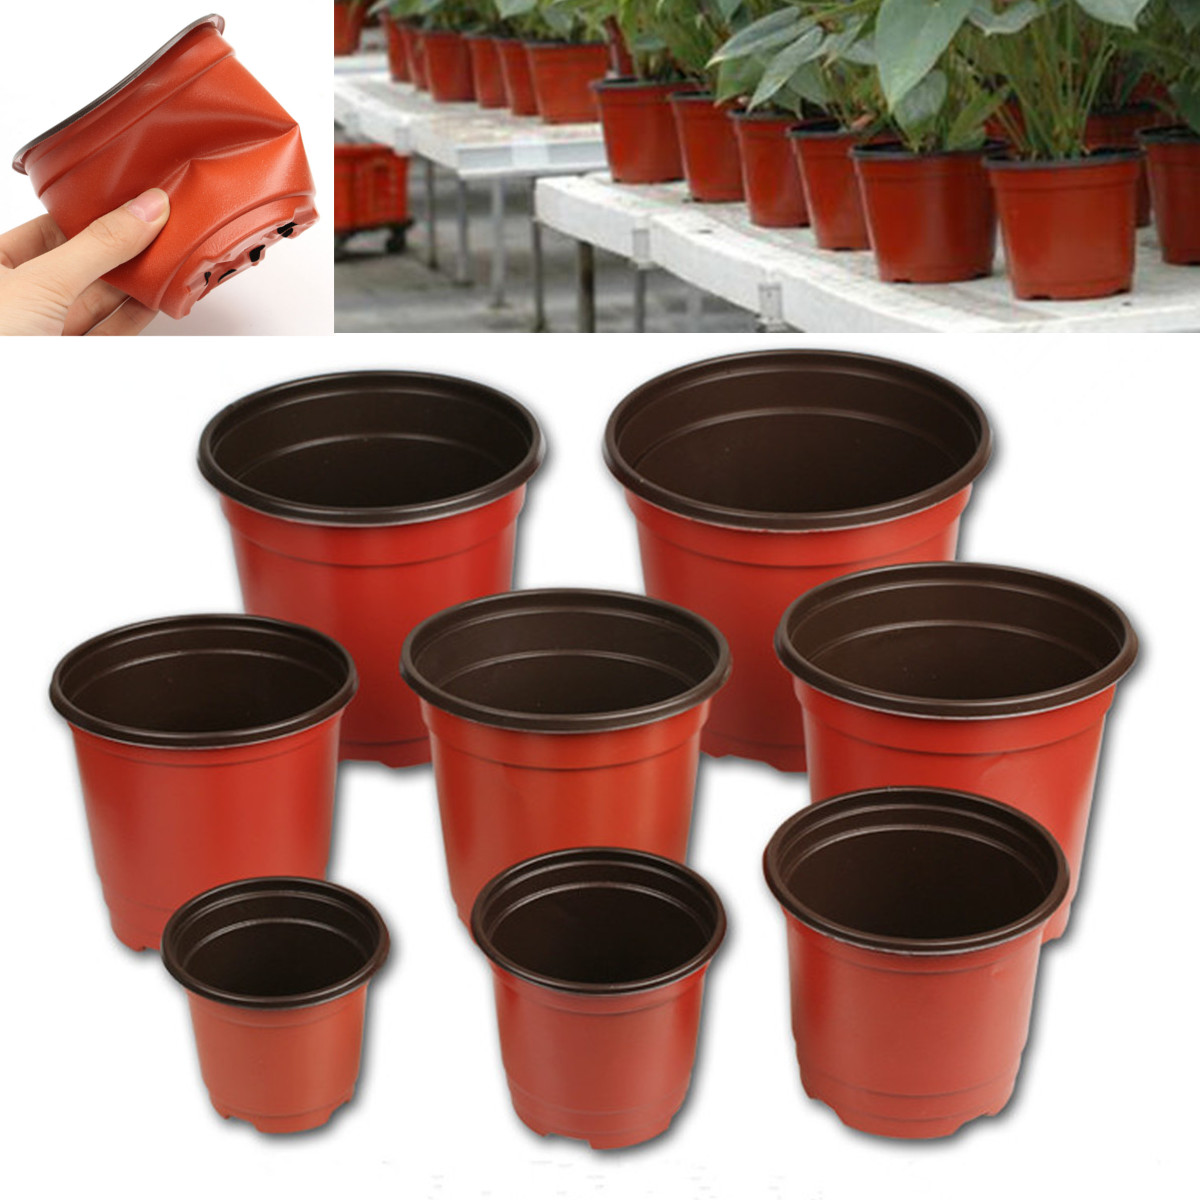 100Pcs Plastic Garden Nursery Pot Flower Terracotta Seedlings Planter Containers Set 48